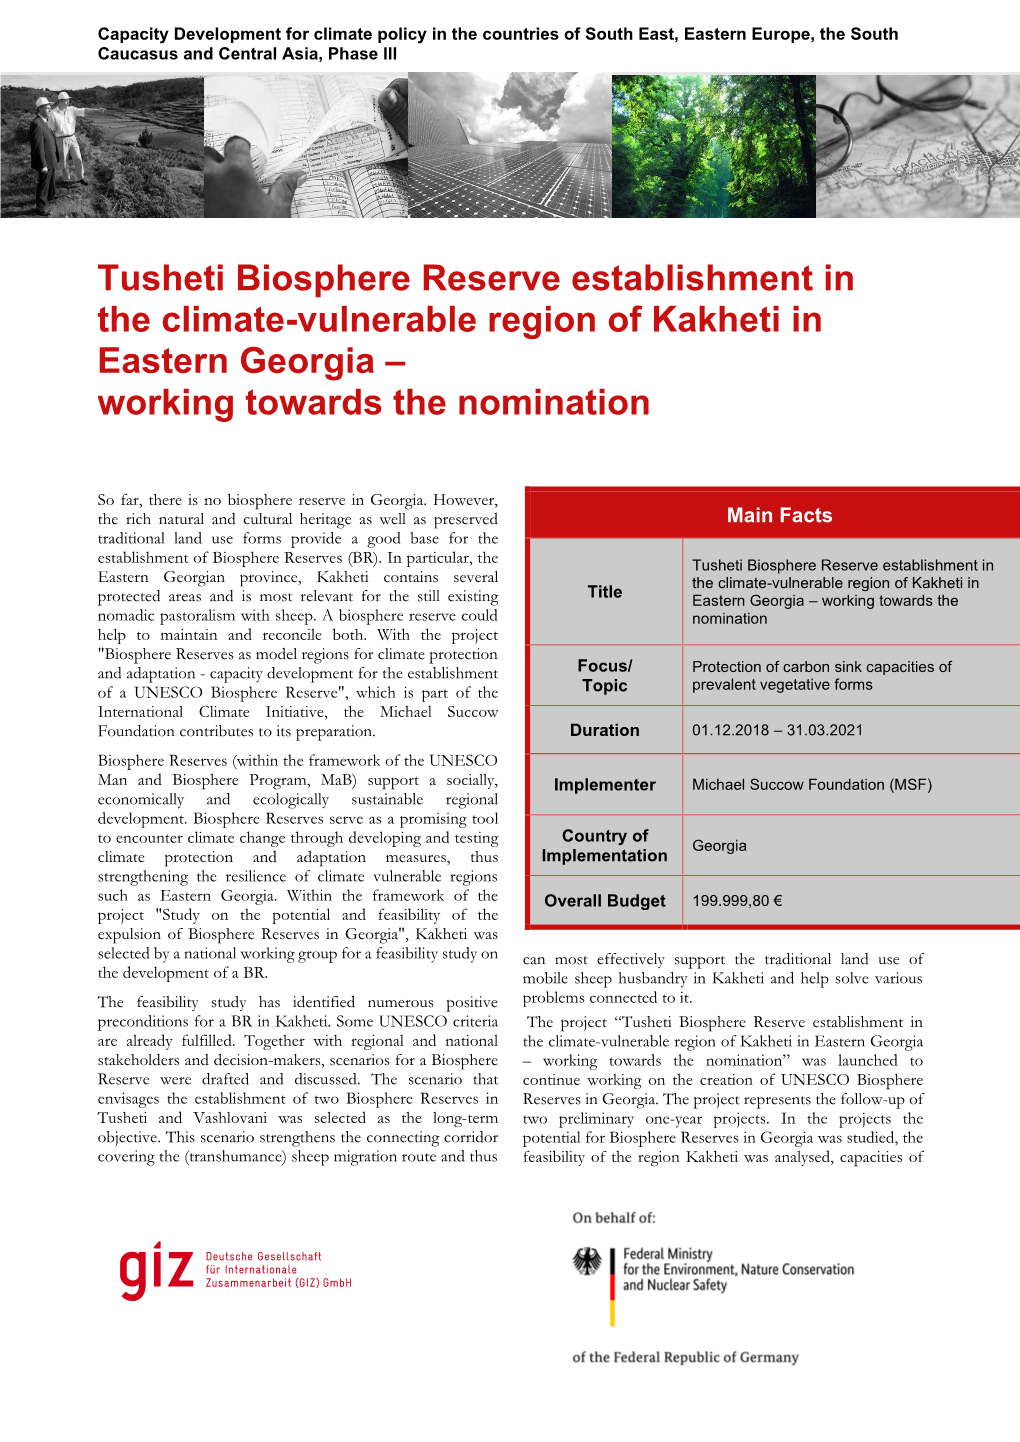 Tusheti Biosphere Reserve Establishment in the Climate-Vulnerable Region of Kakheti in Eastern Georgia – Working Towards the Nomination